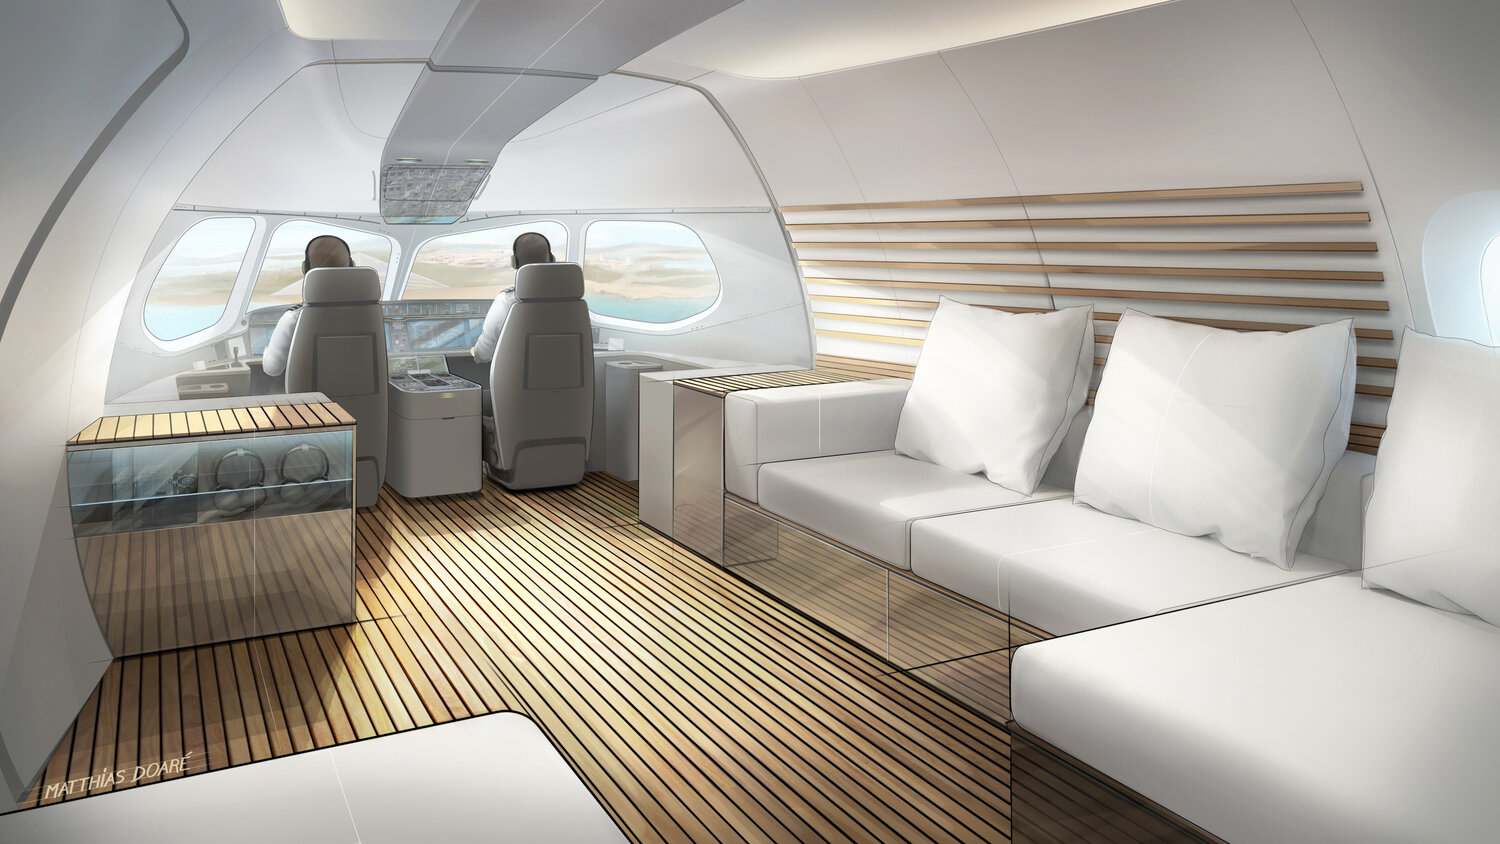 Designinvestment Vip Interior Skyretreat A220 For Lufthansa